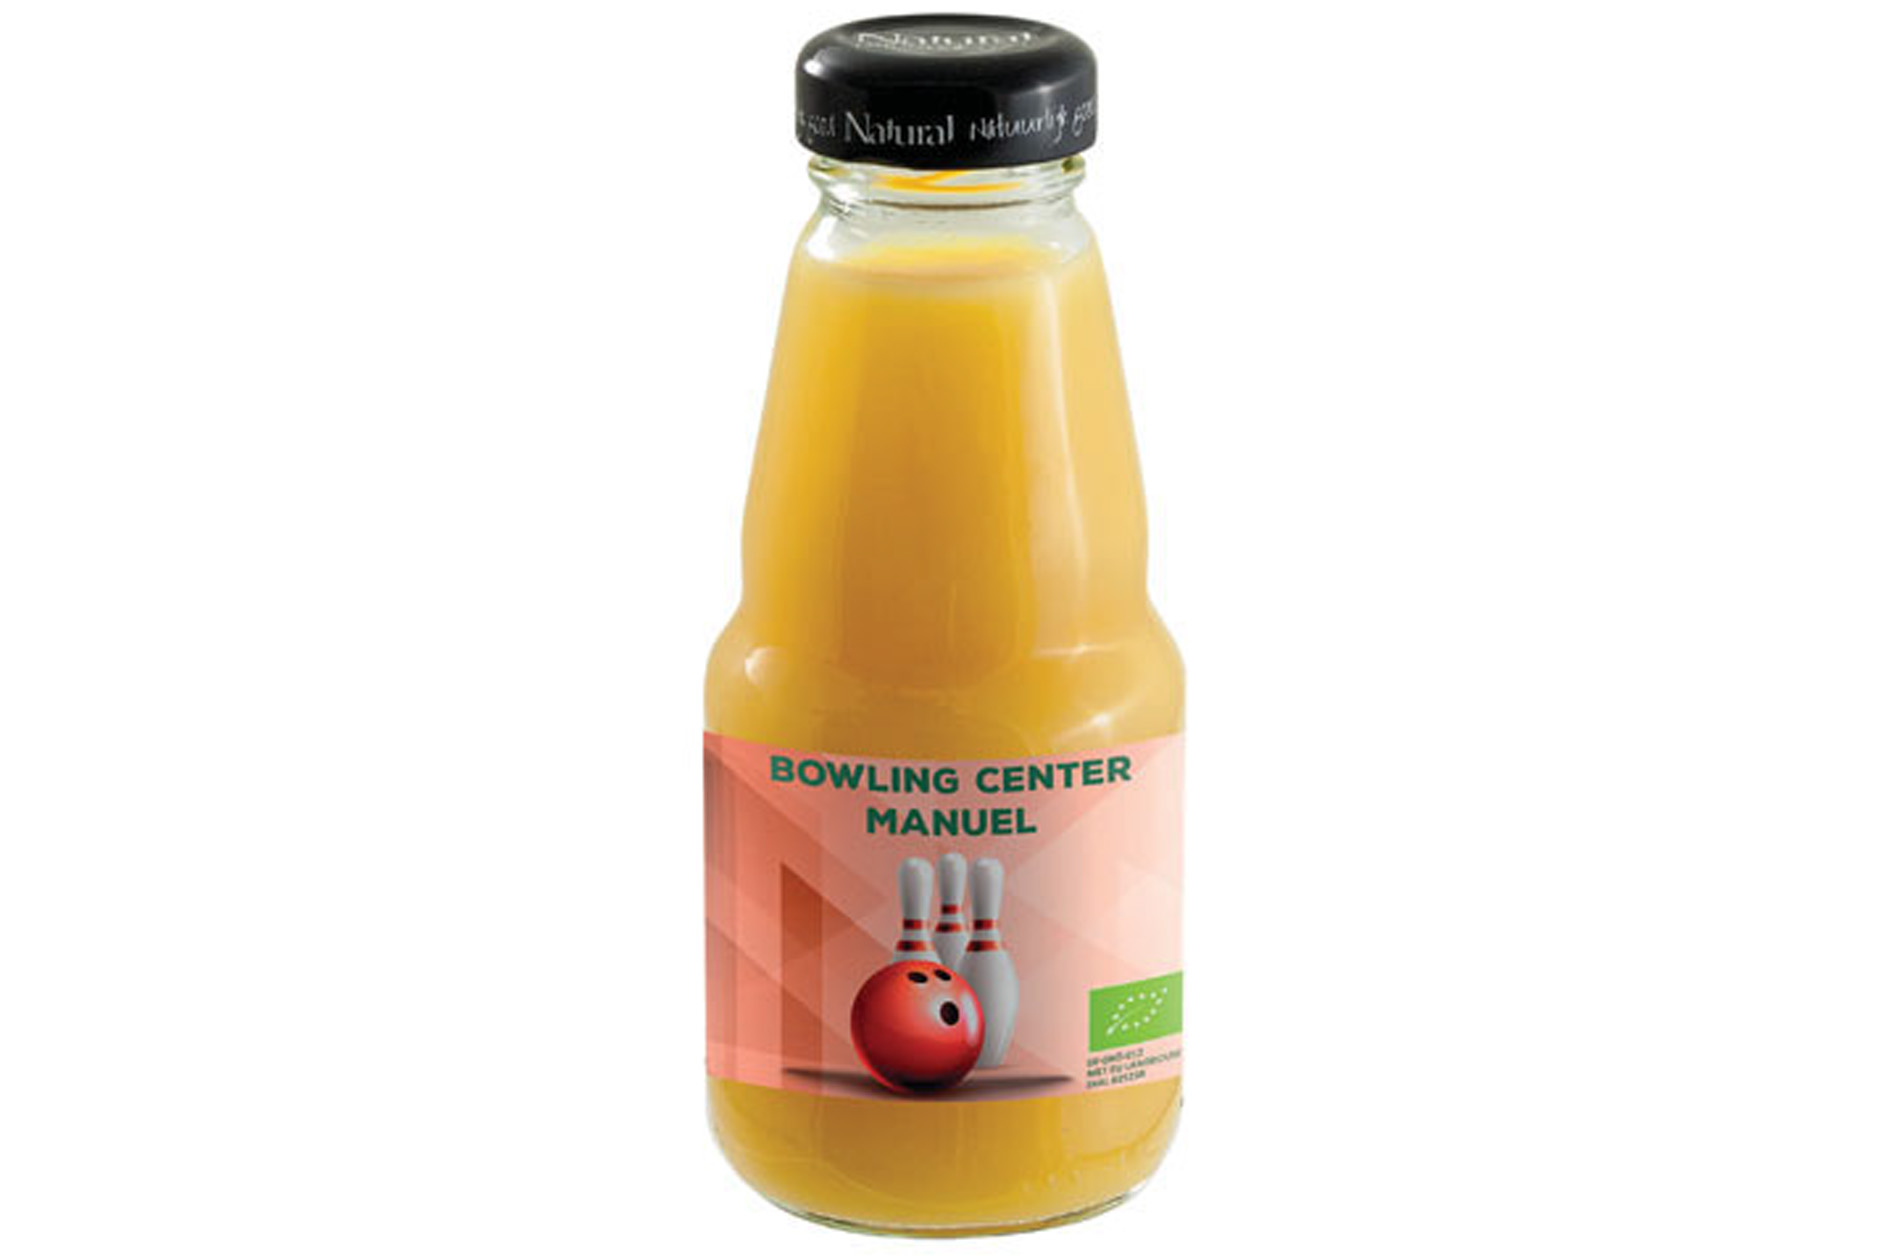 Orange juice in a 200ml glass bottle with a black cap - East Coker - Churchtown